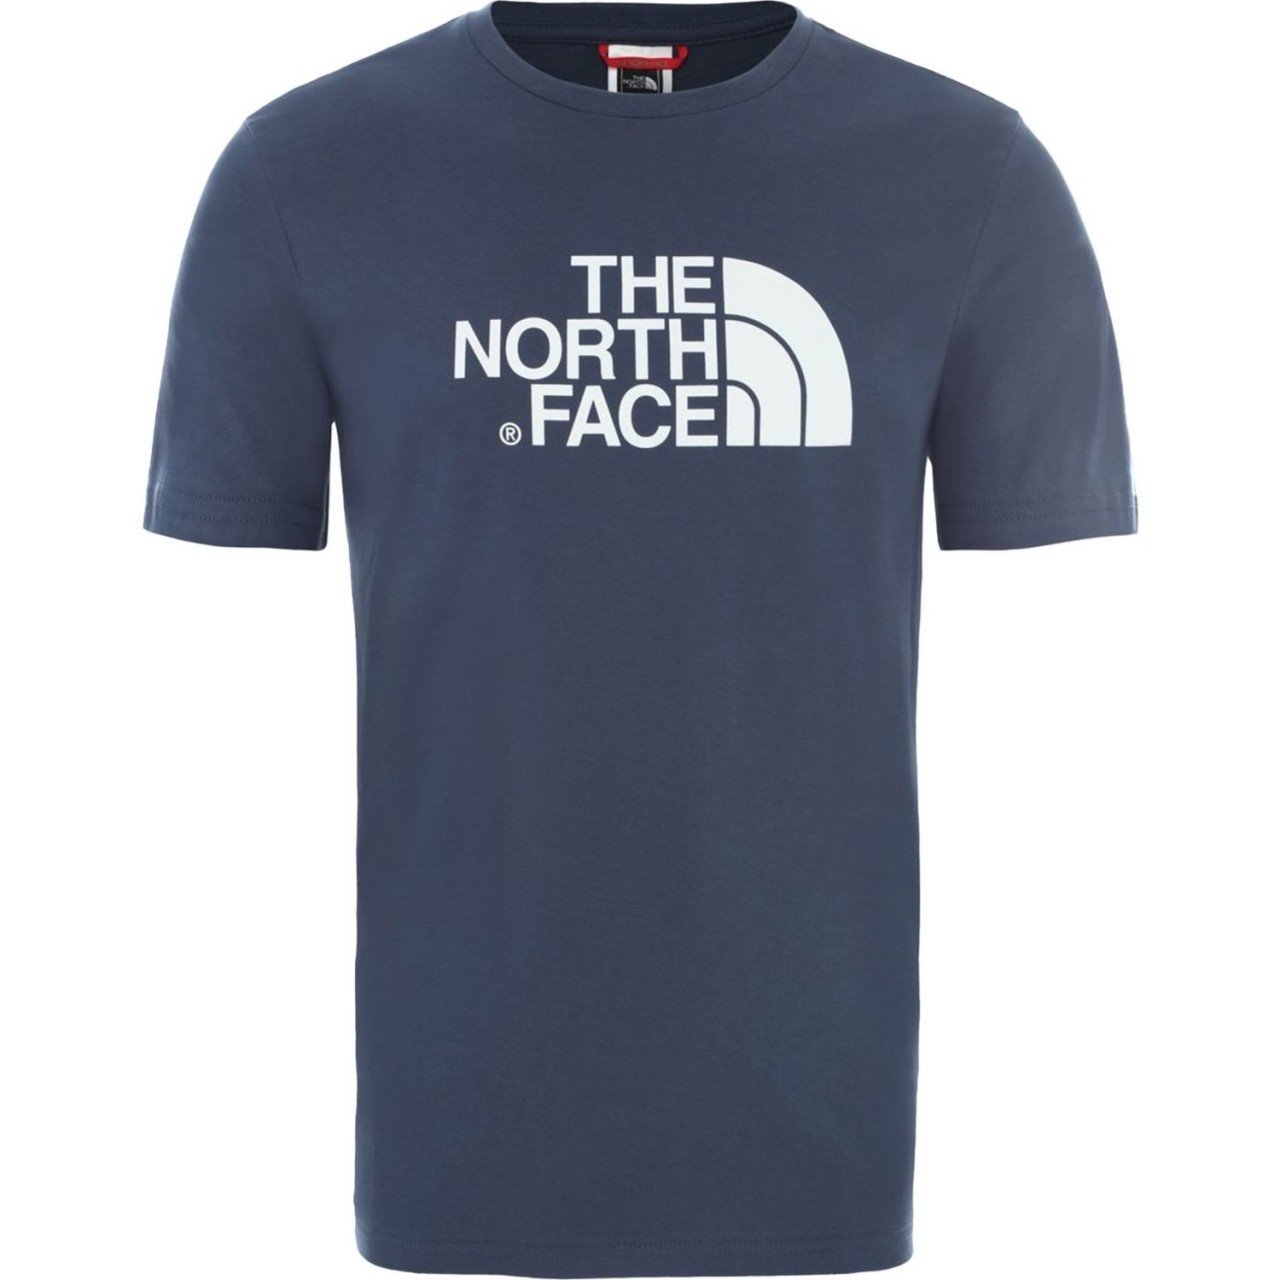 The North Face Erkek S/S Easy Tişört Mavi